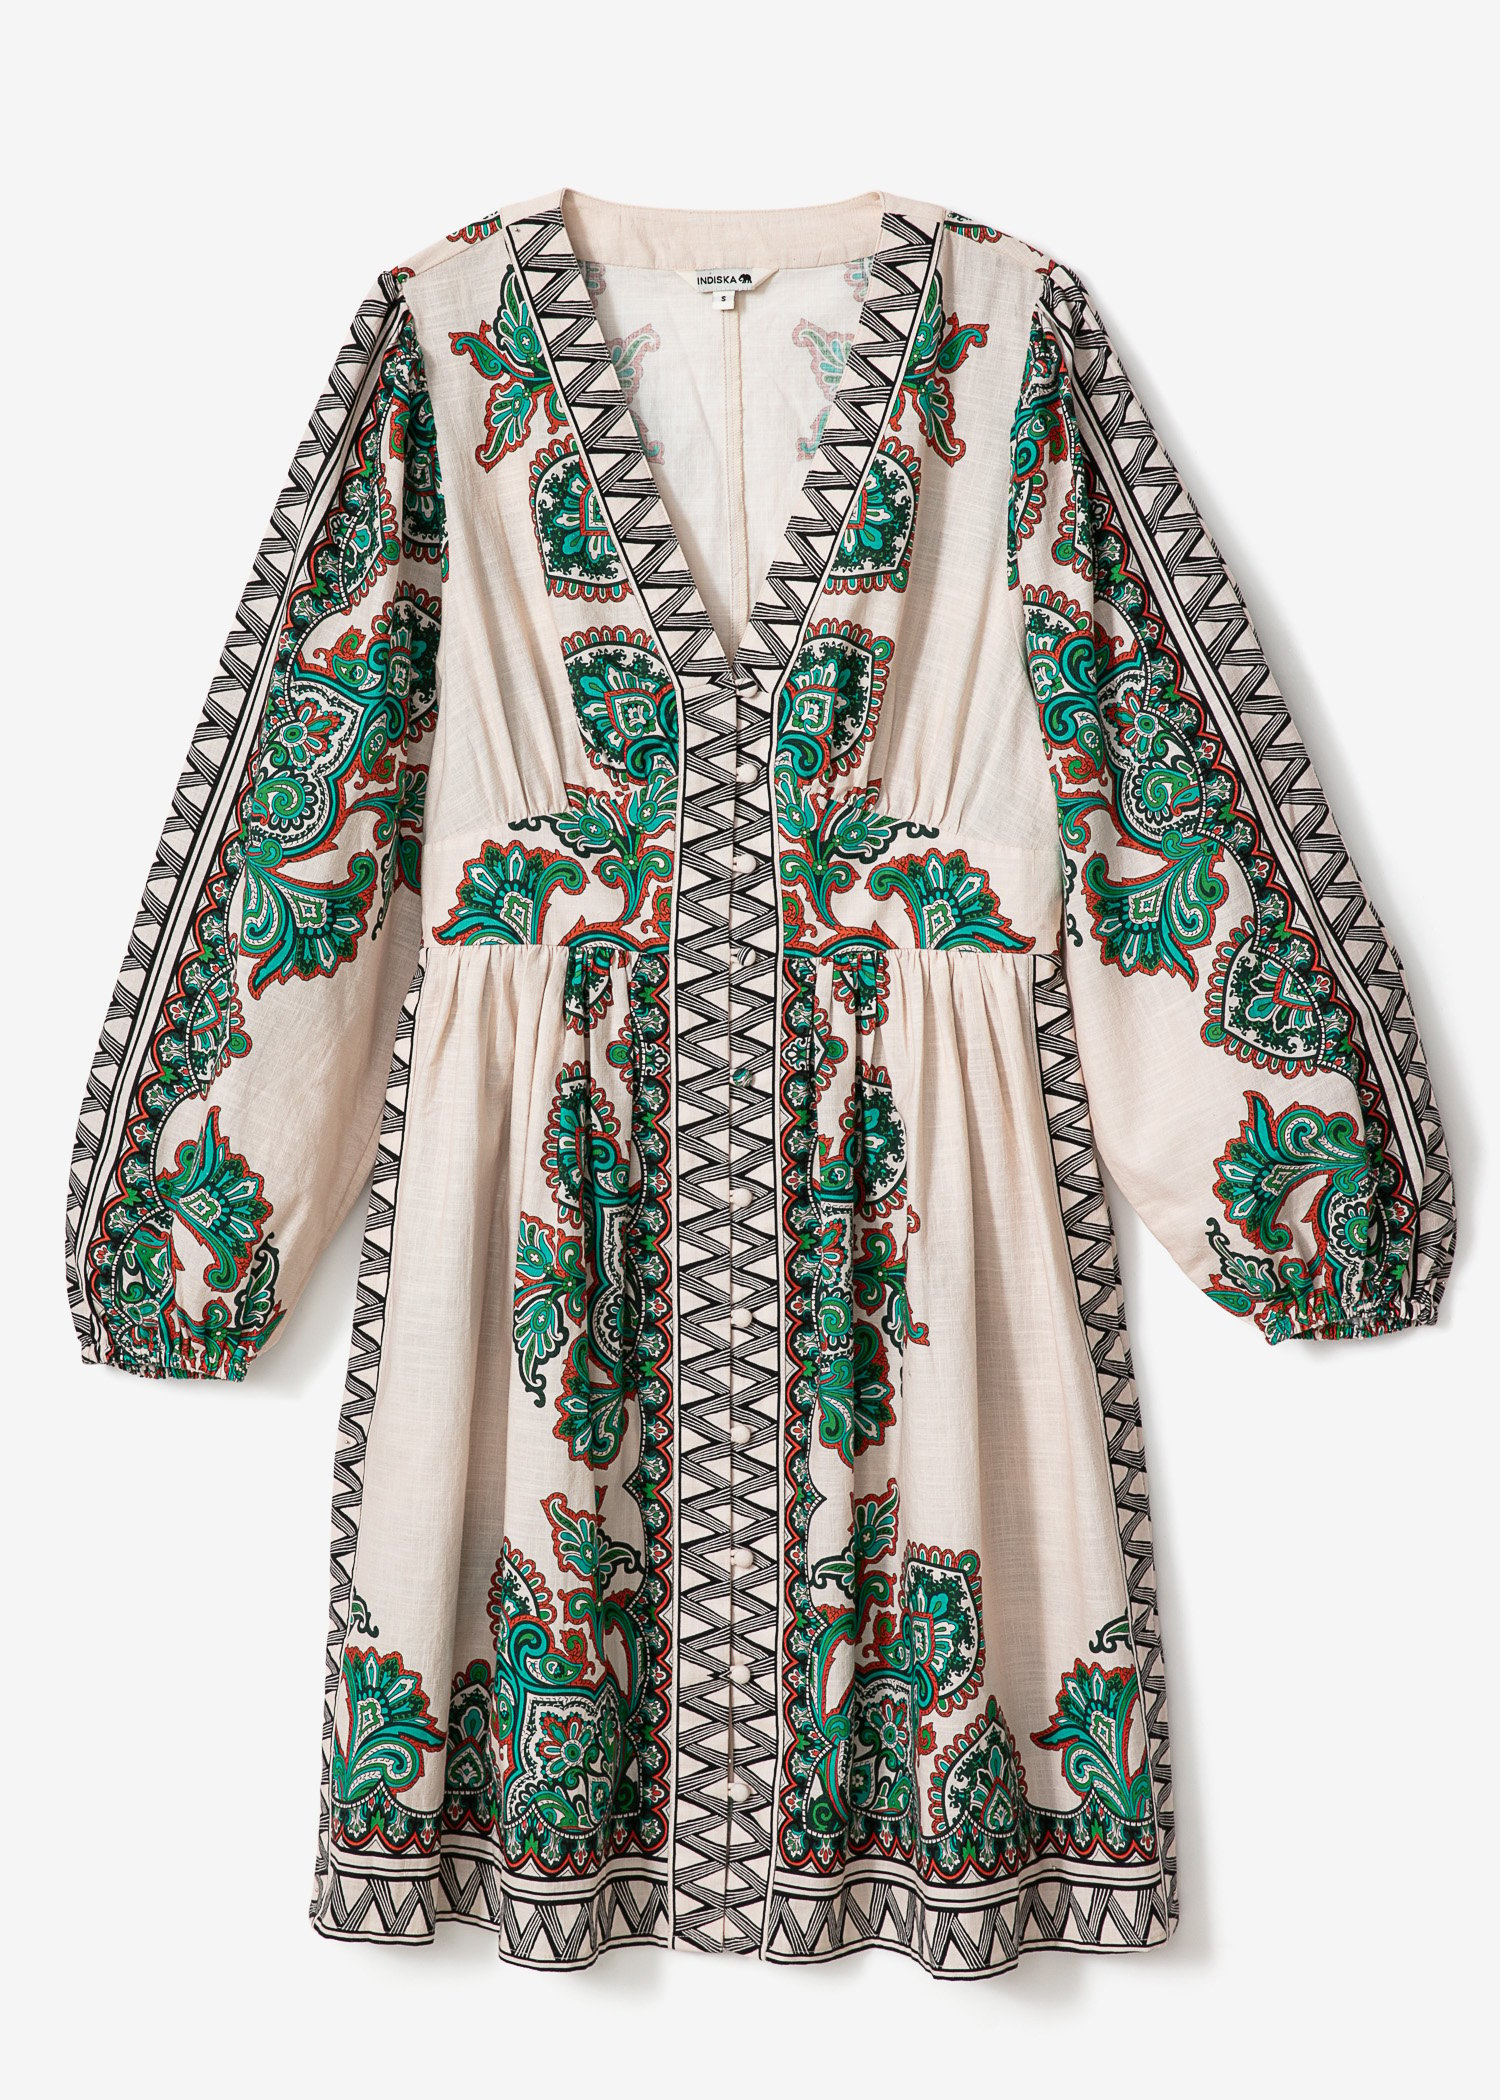 Paisley patterned cotton dress